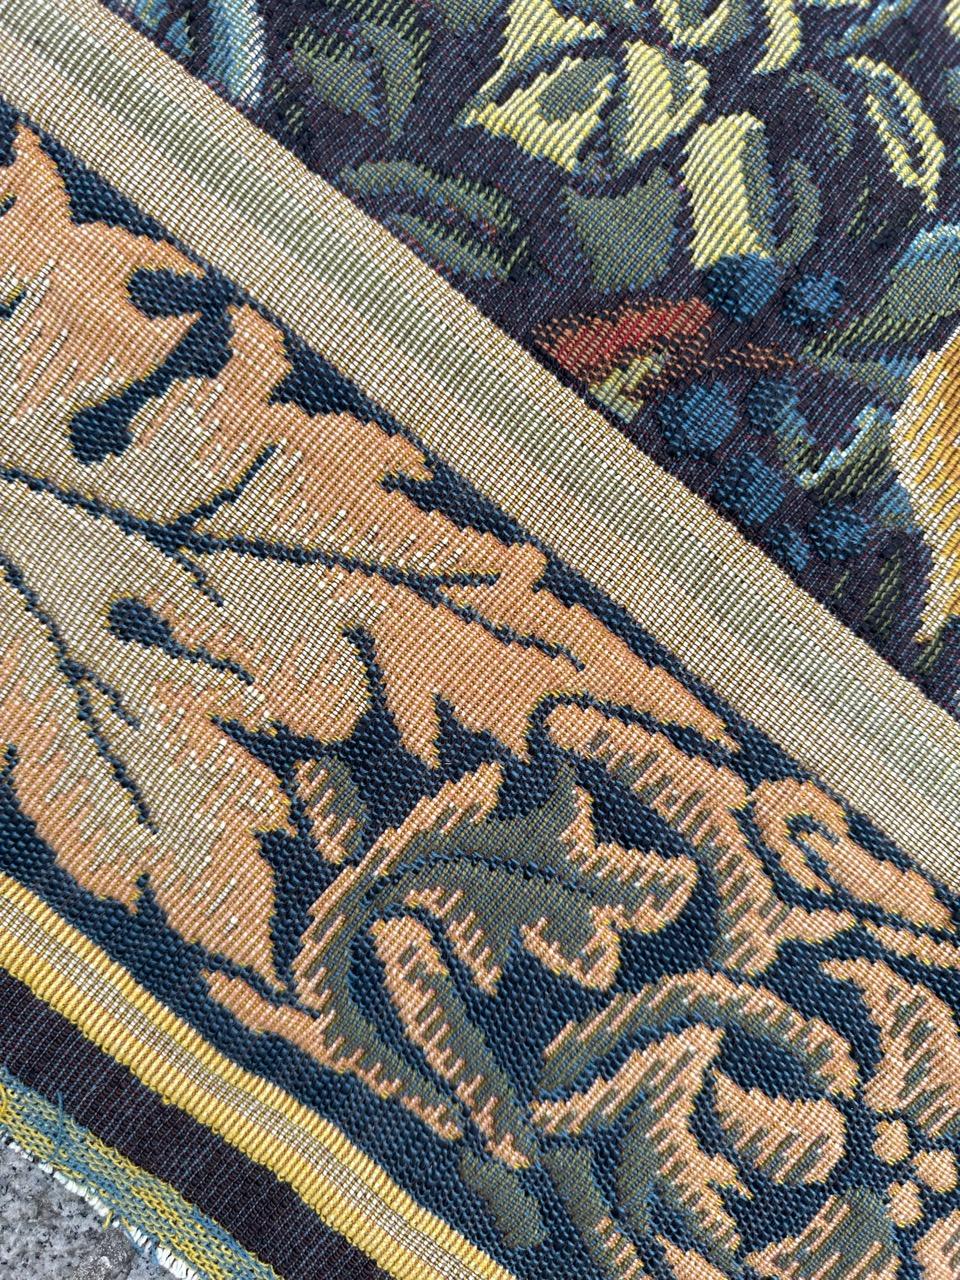 Bobyrug’s Wonderful Large Jaquar Tapestry with Marriage Design  For Sale 7